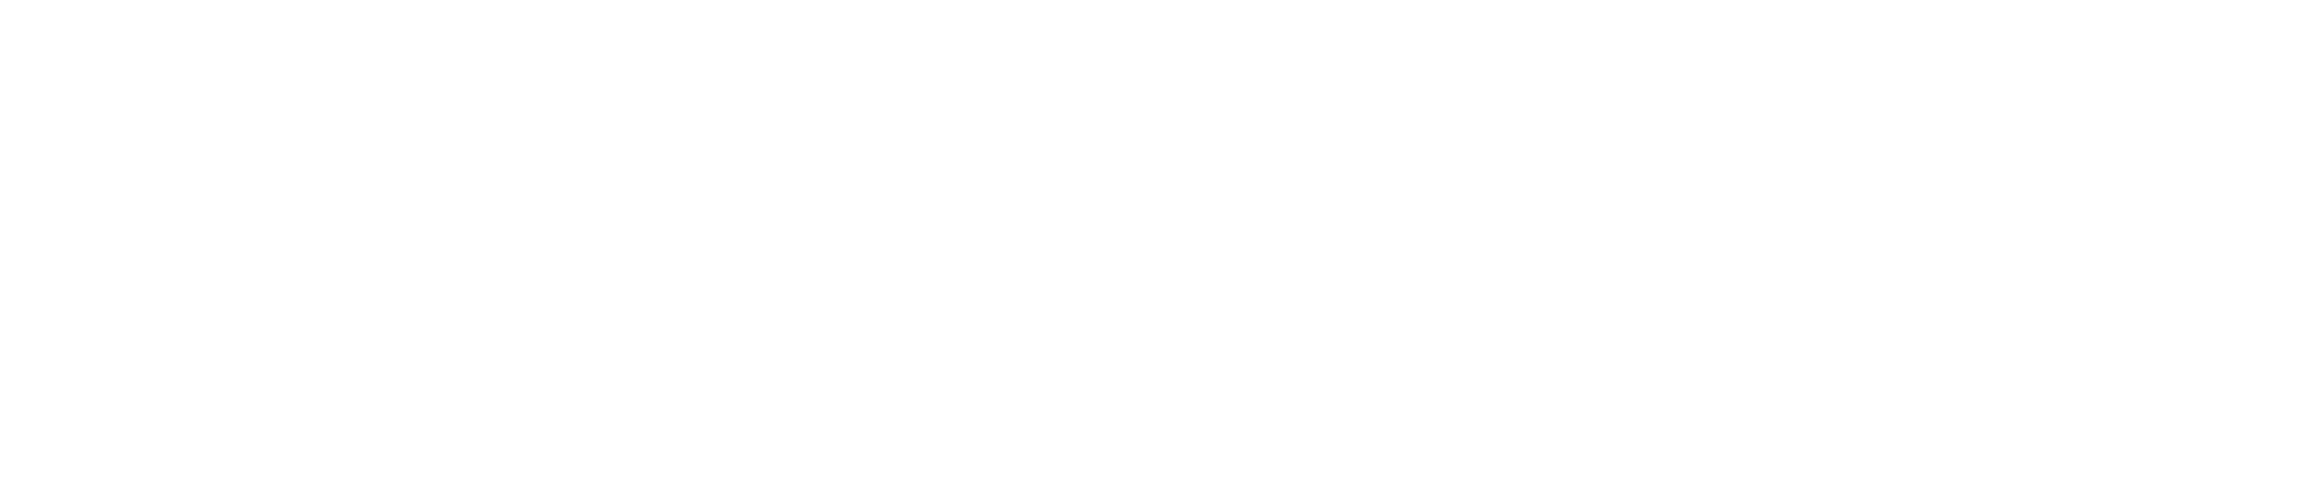 SD protocol logo